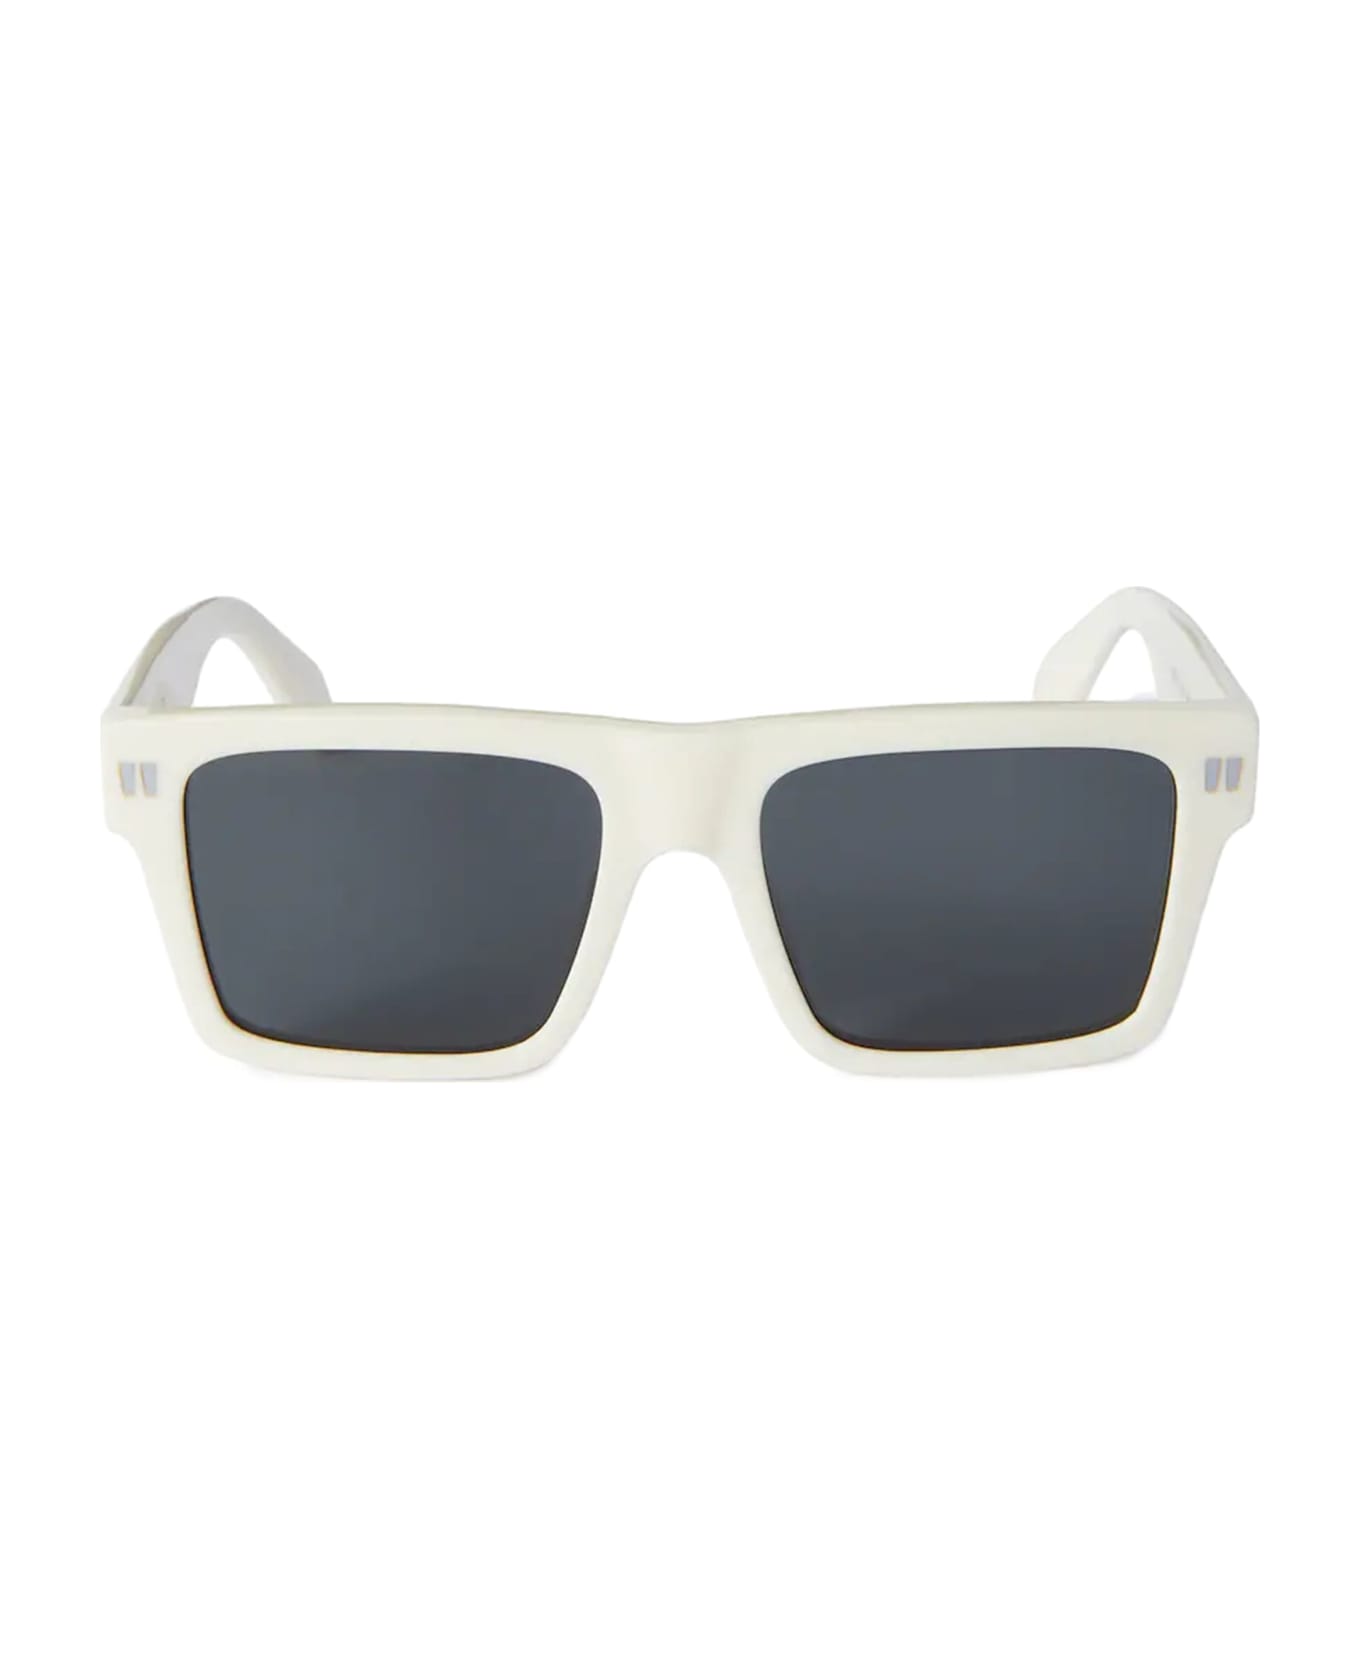 Off-White Lawton - White / Dark Grey Sunglasses - White